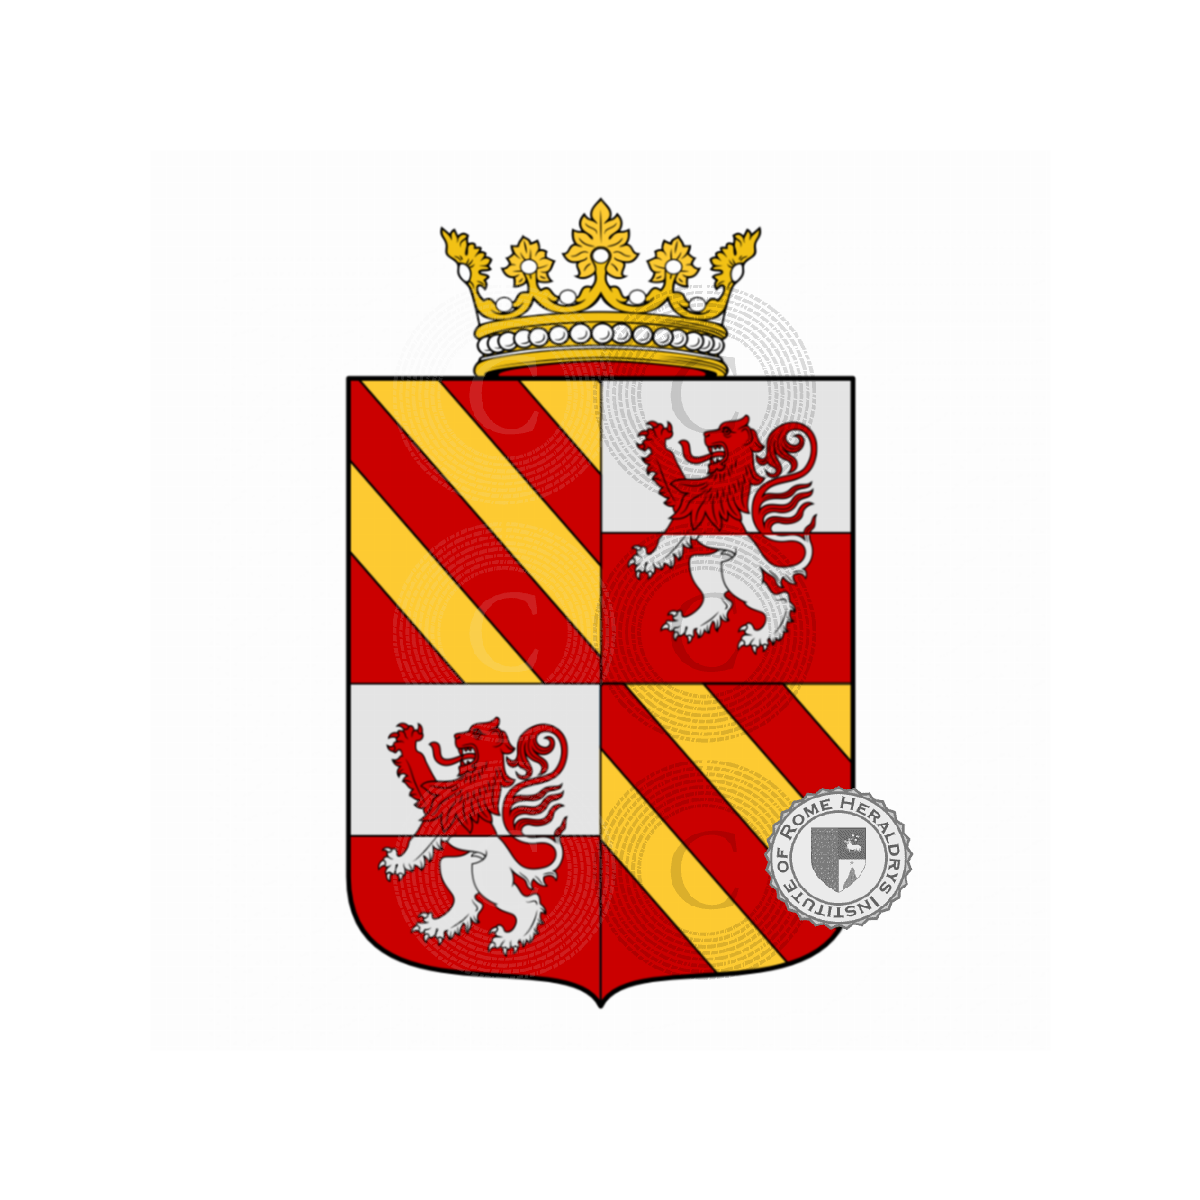 Wappen der FamilieAquino Caramanico, Aquino Caramanico,Aquino-Caramanico,d'Aquino